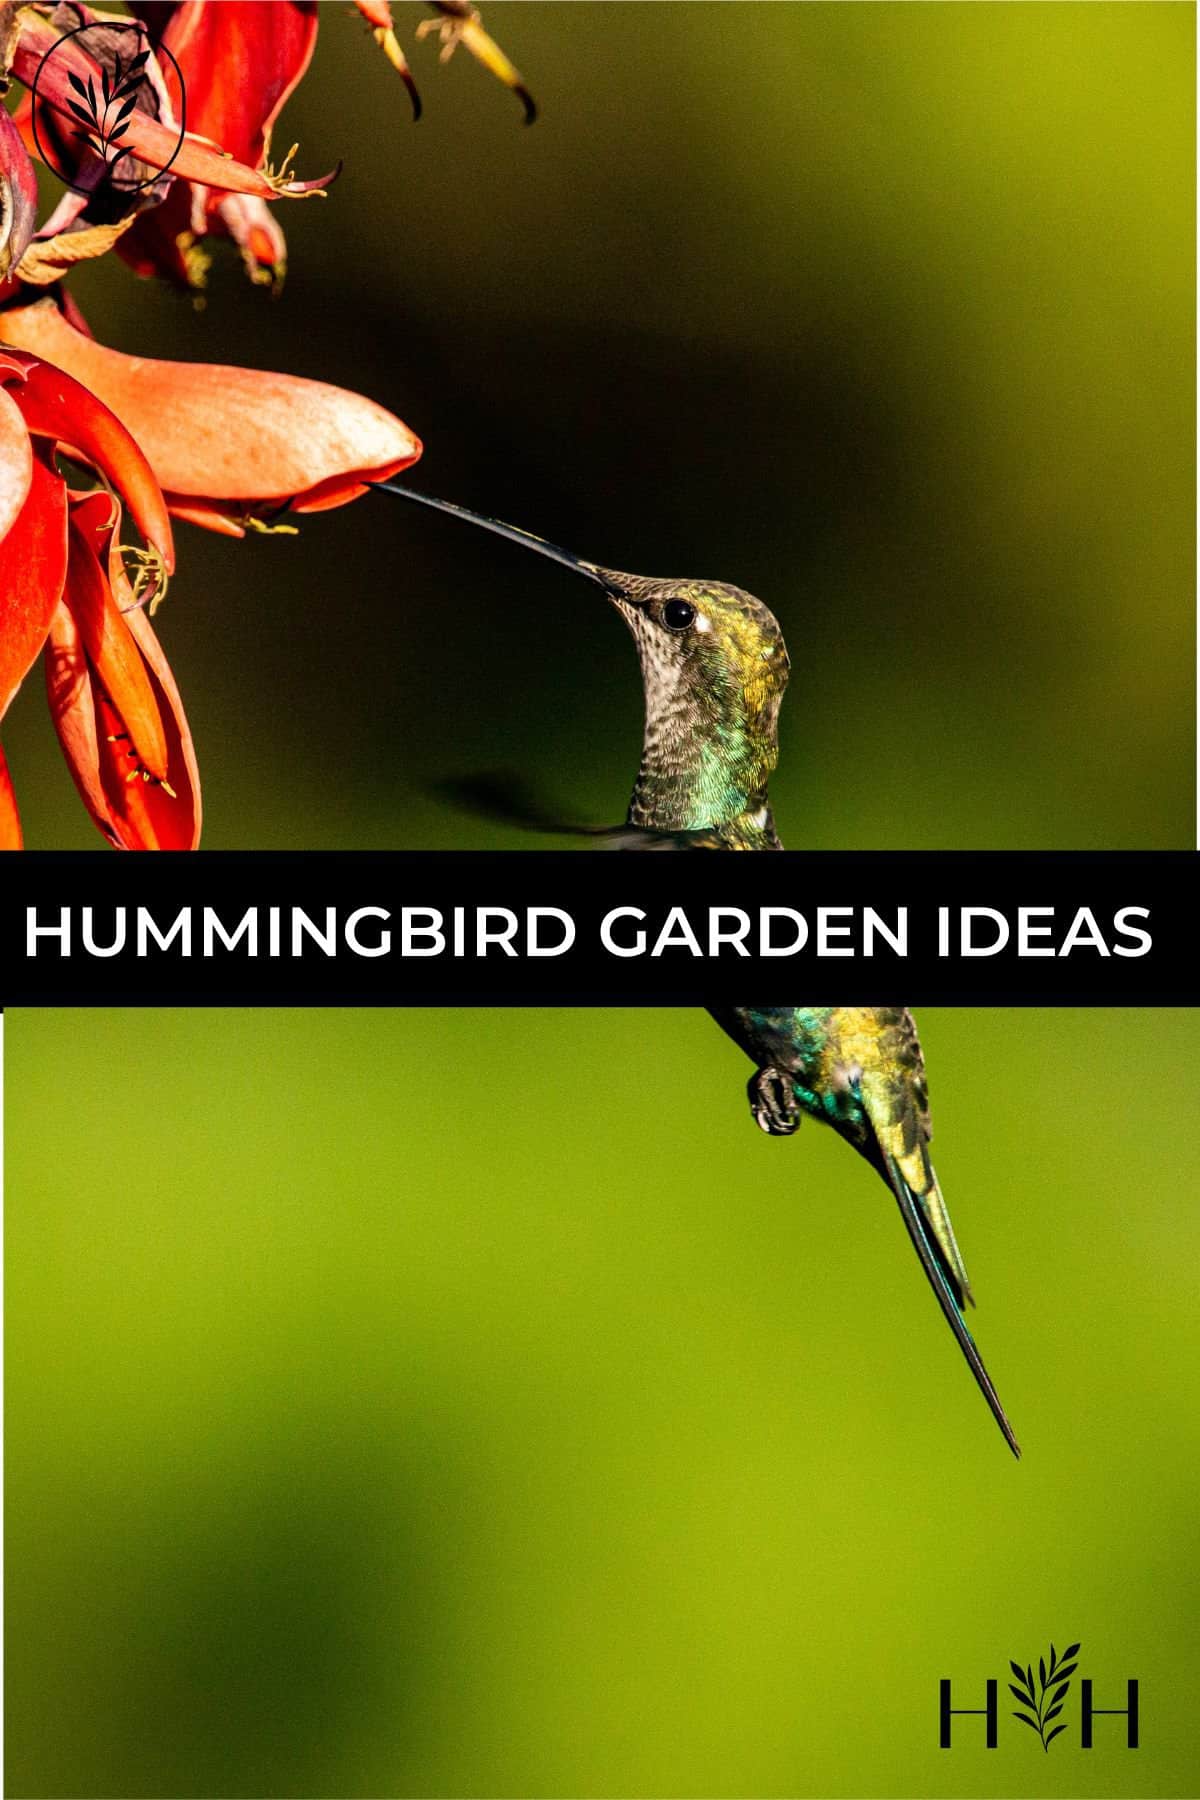 Hummingbird garden ideas via @home4theharvest